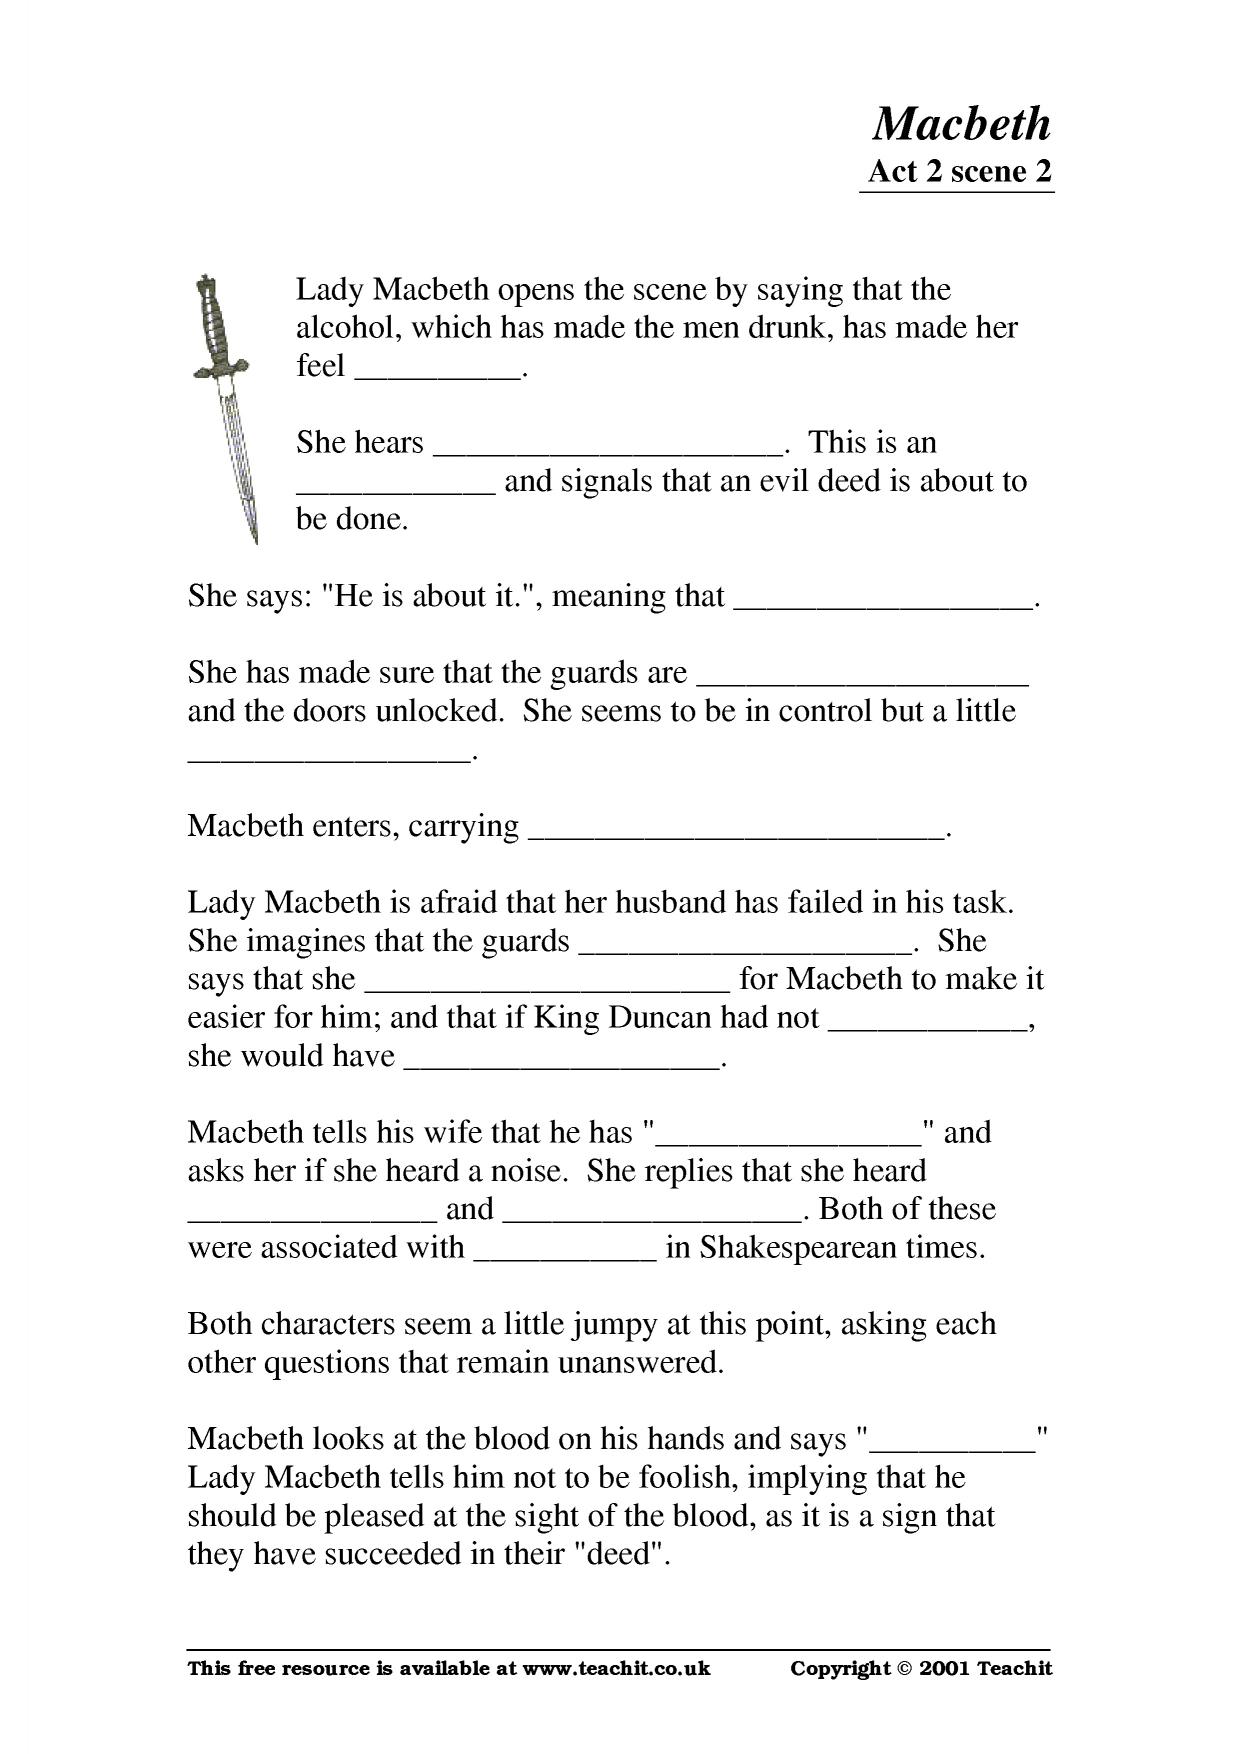 Cloze summary for Act 2 Scene 2|Macbeth|KS3 English|Teachit